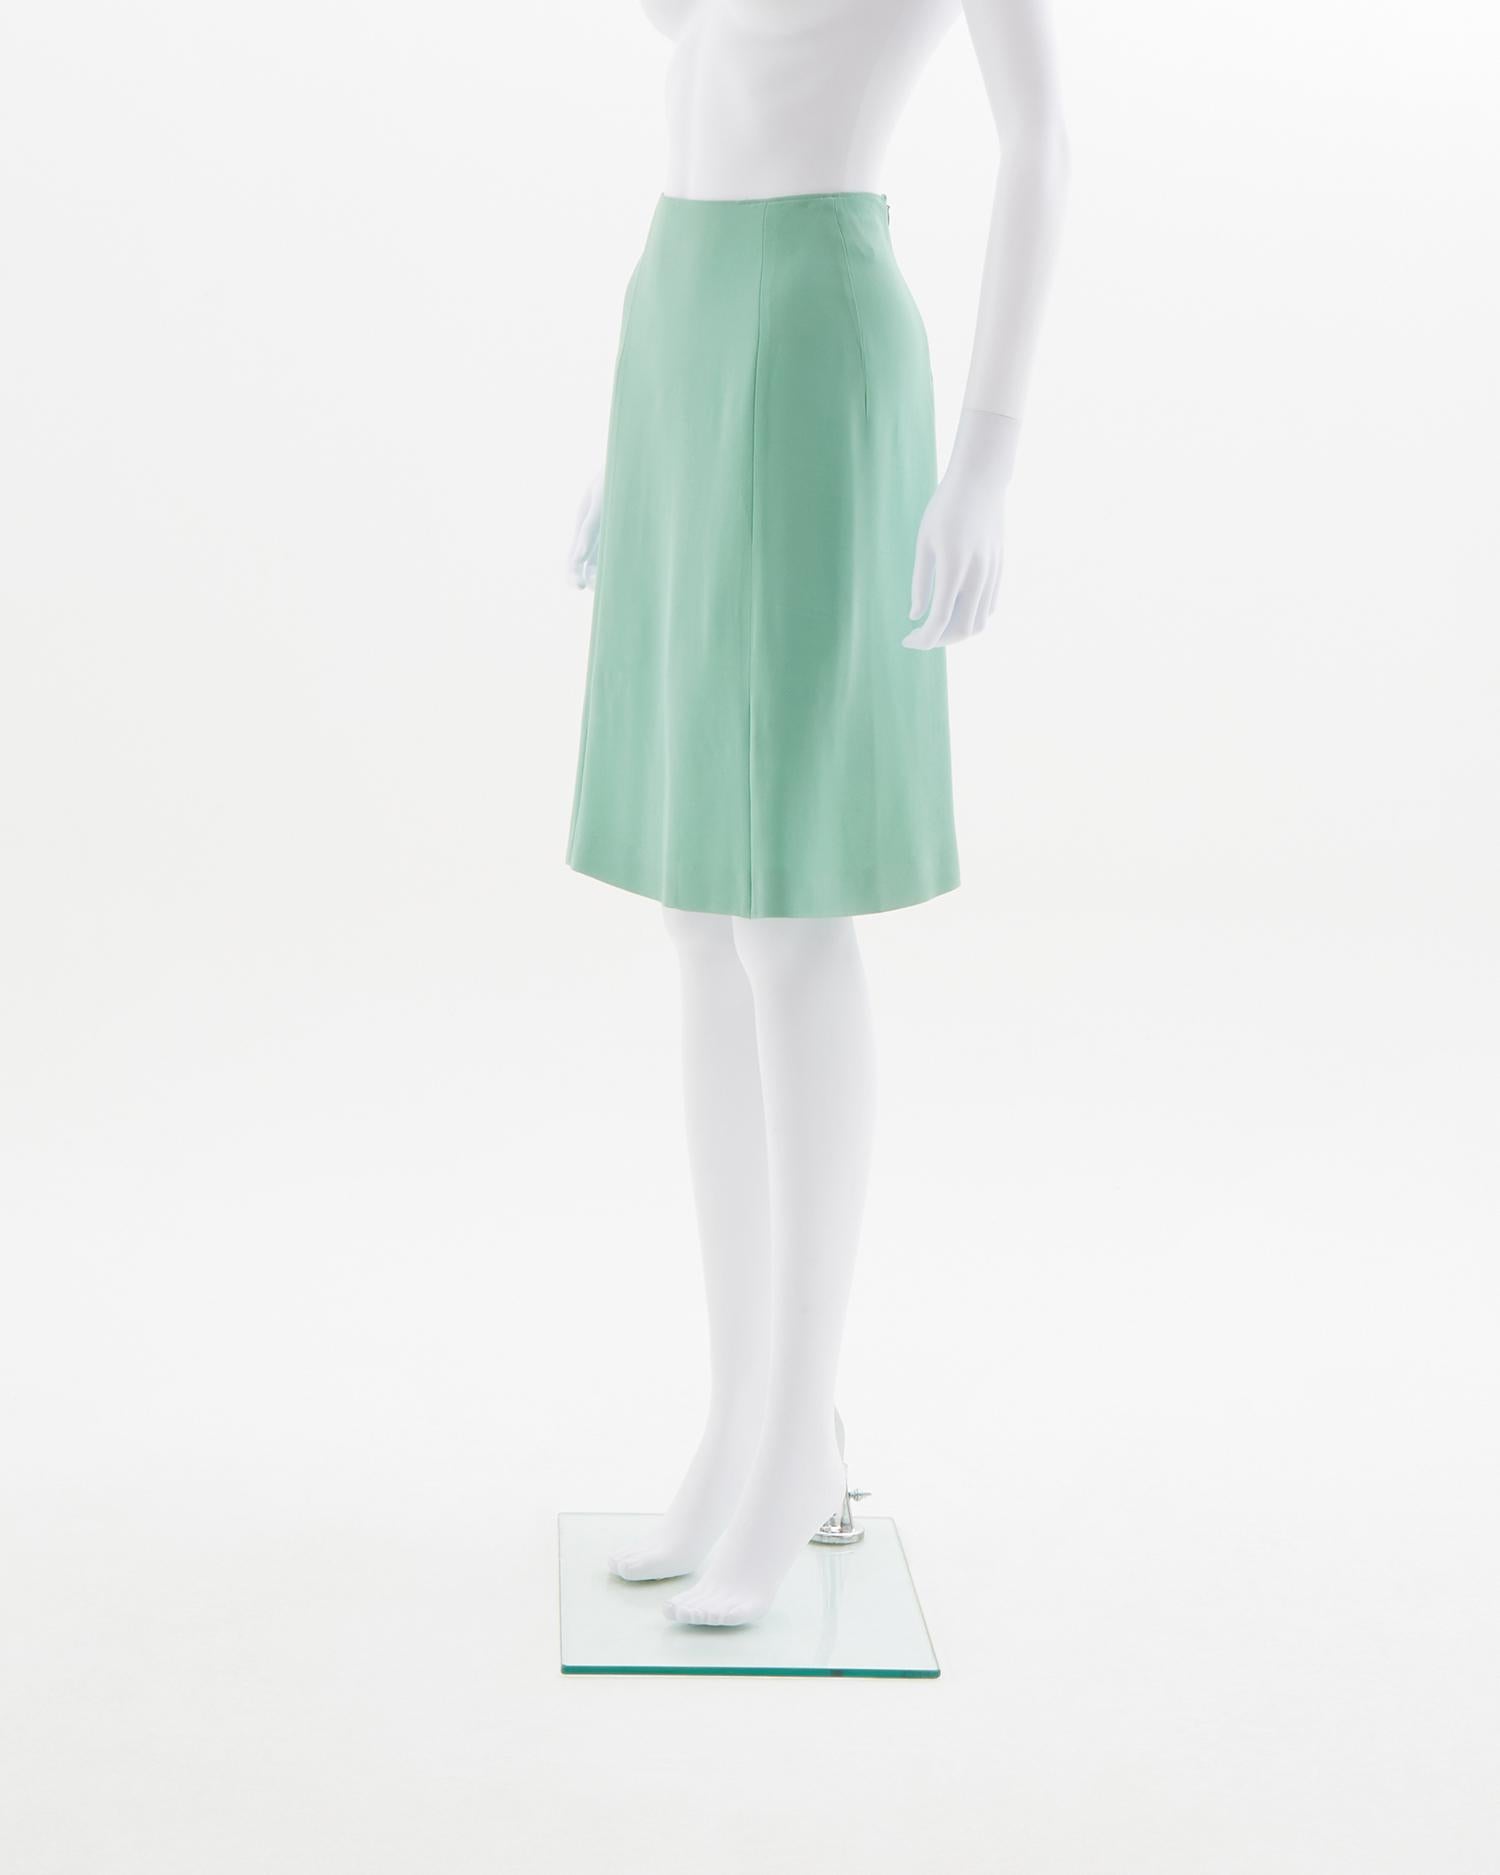 Women's Miu Miu mint beaded embellished crewneck top & mint pencil skirt set, ss 2004 For Sale